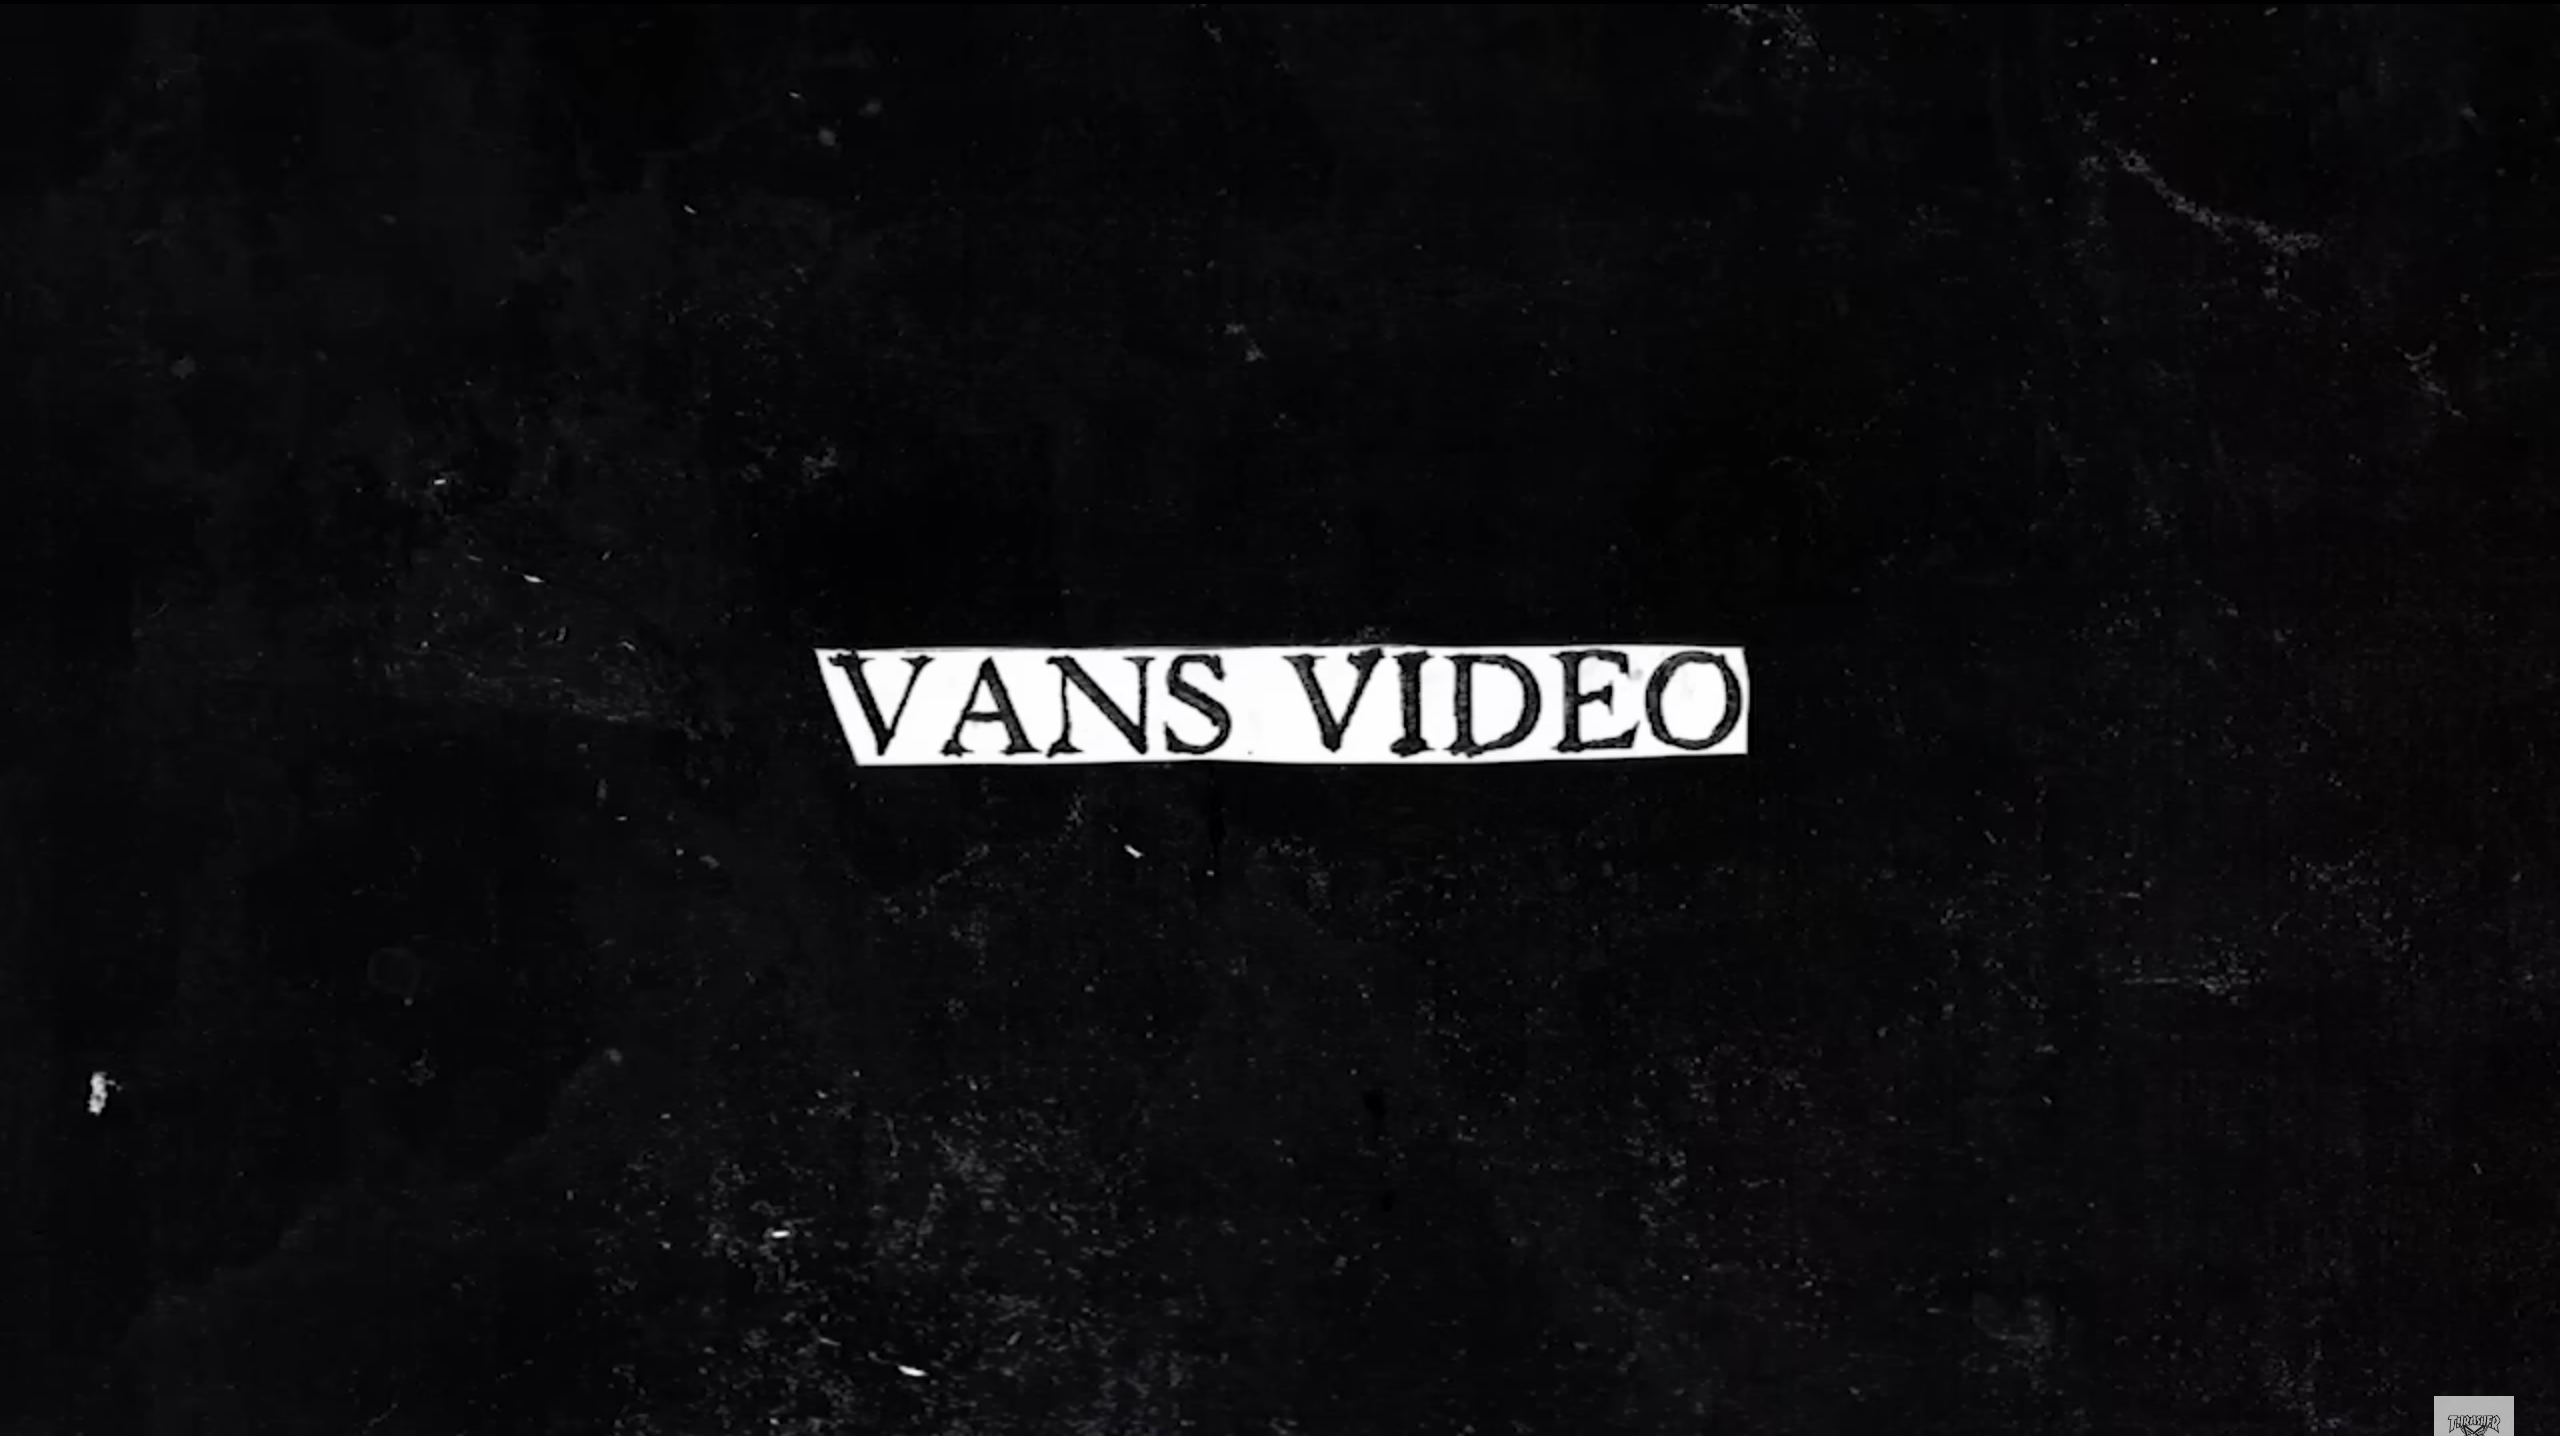 VANS VIDEO | By Fletch